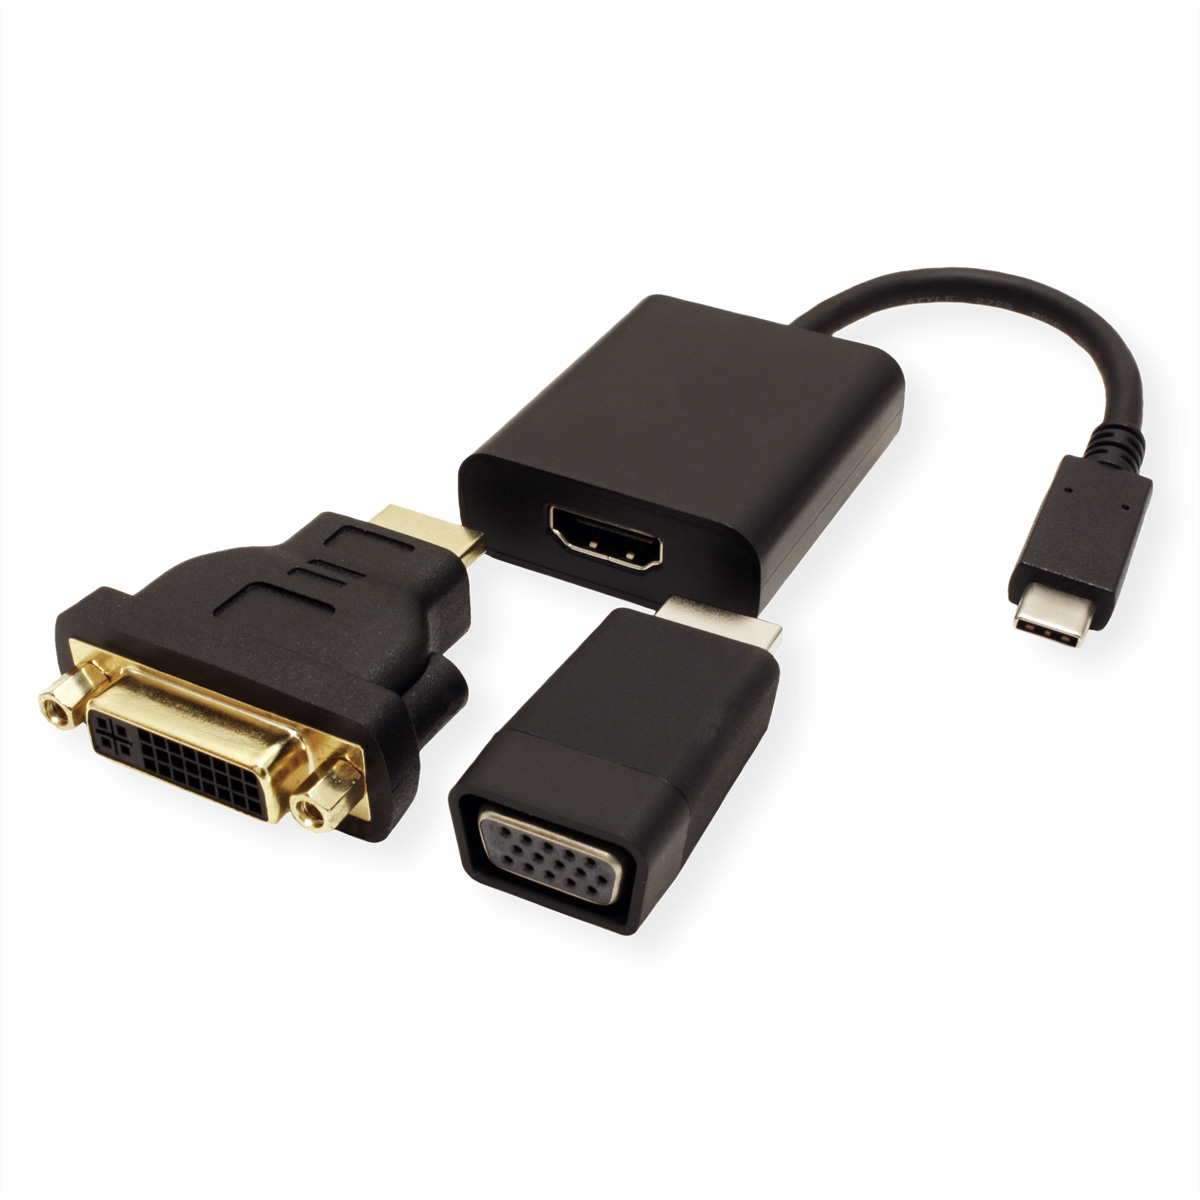 USB-Grafikadapter, C VALUE - Typ + schwarz Display HDMI DVI USB + Adapter VGA